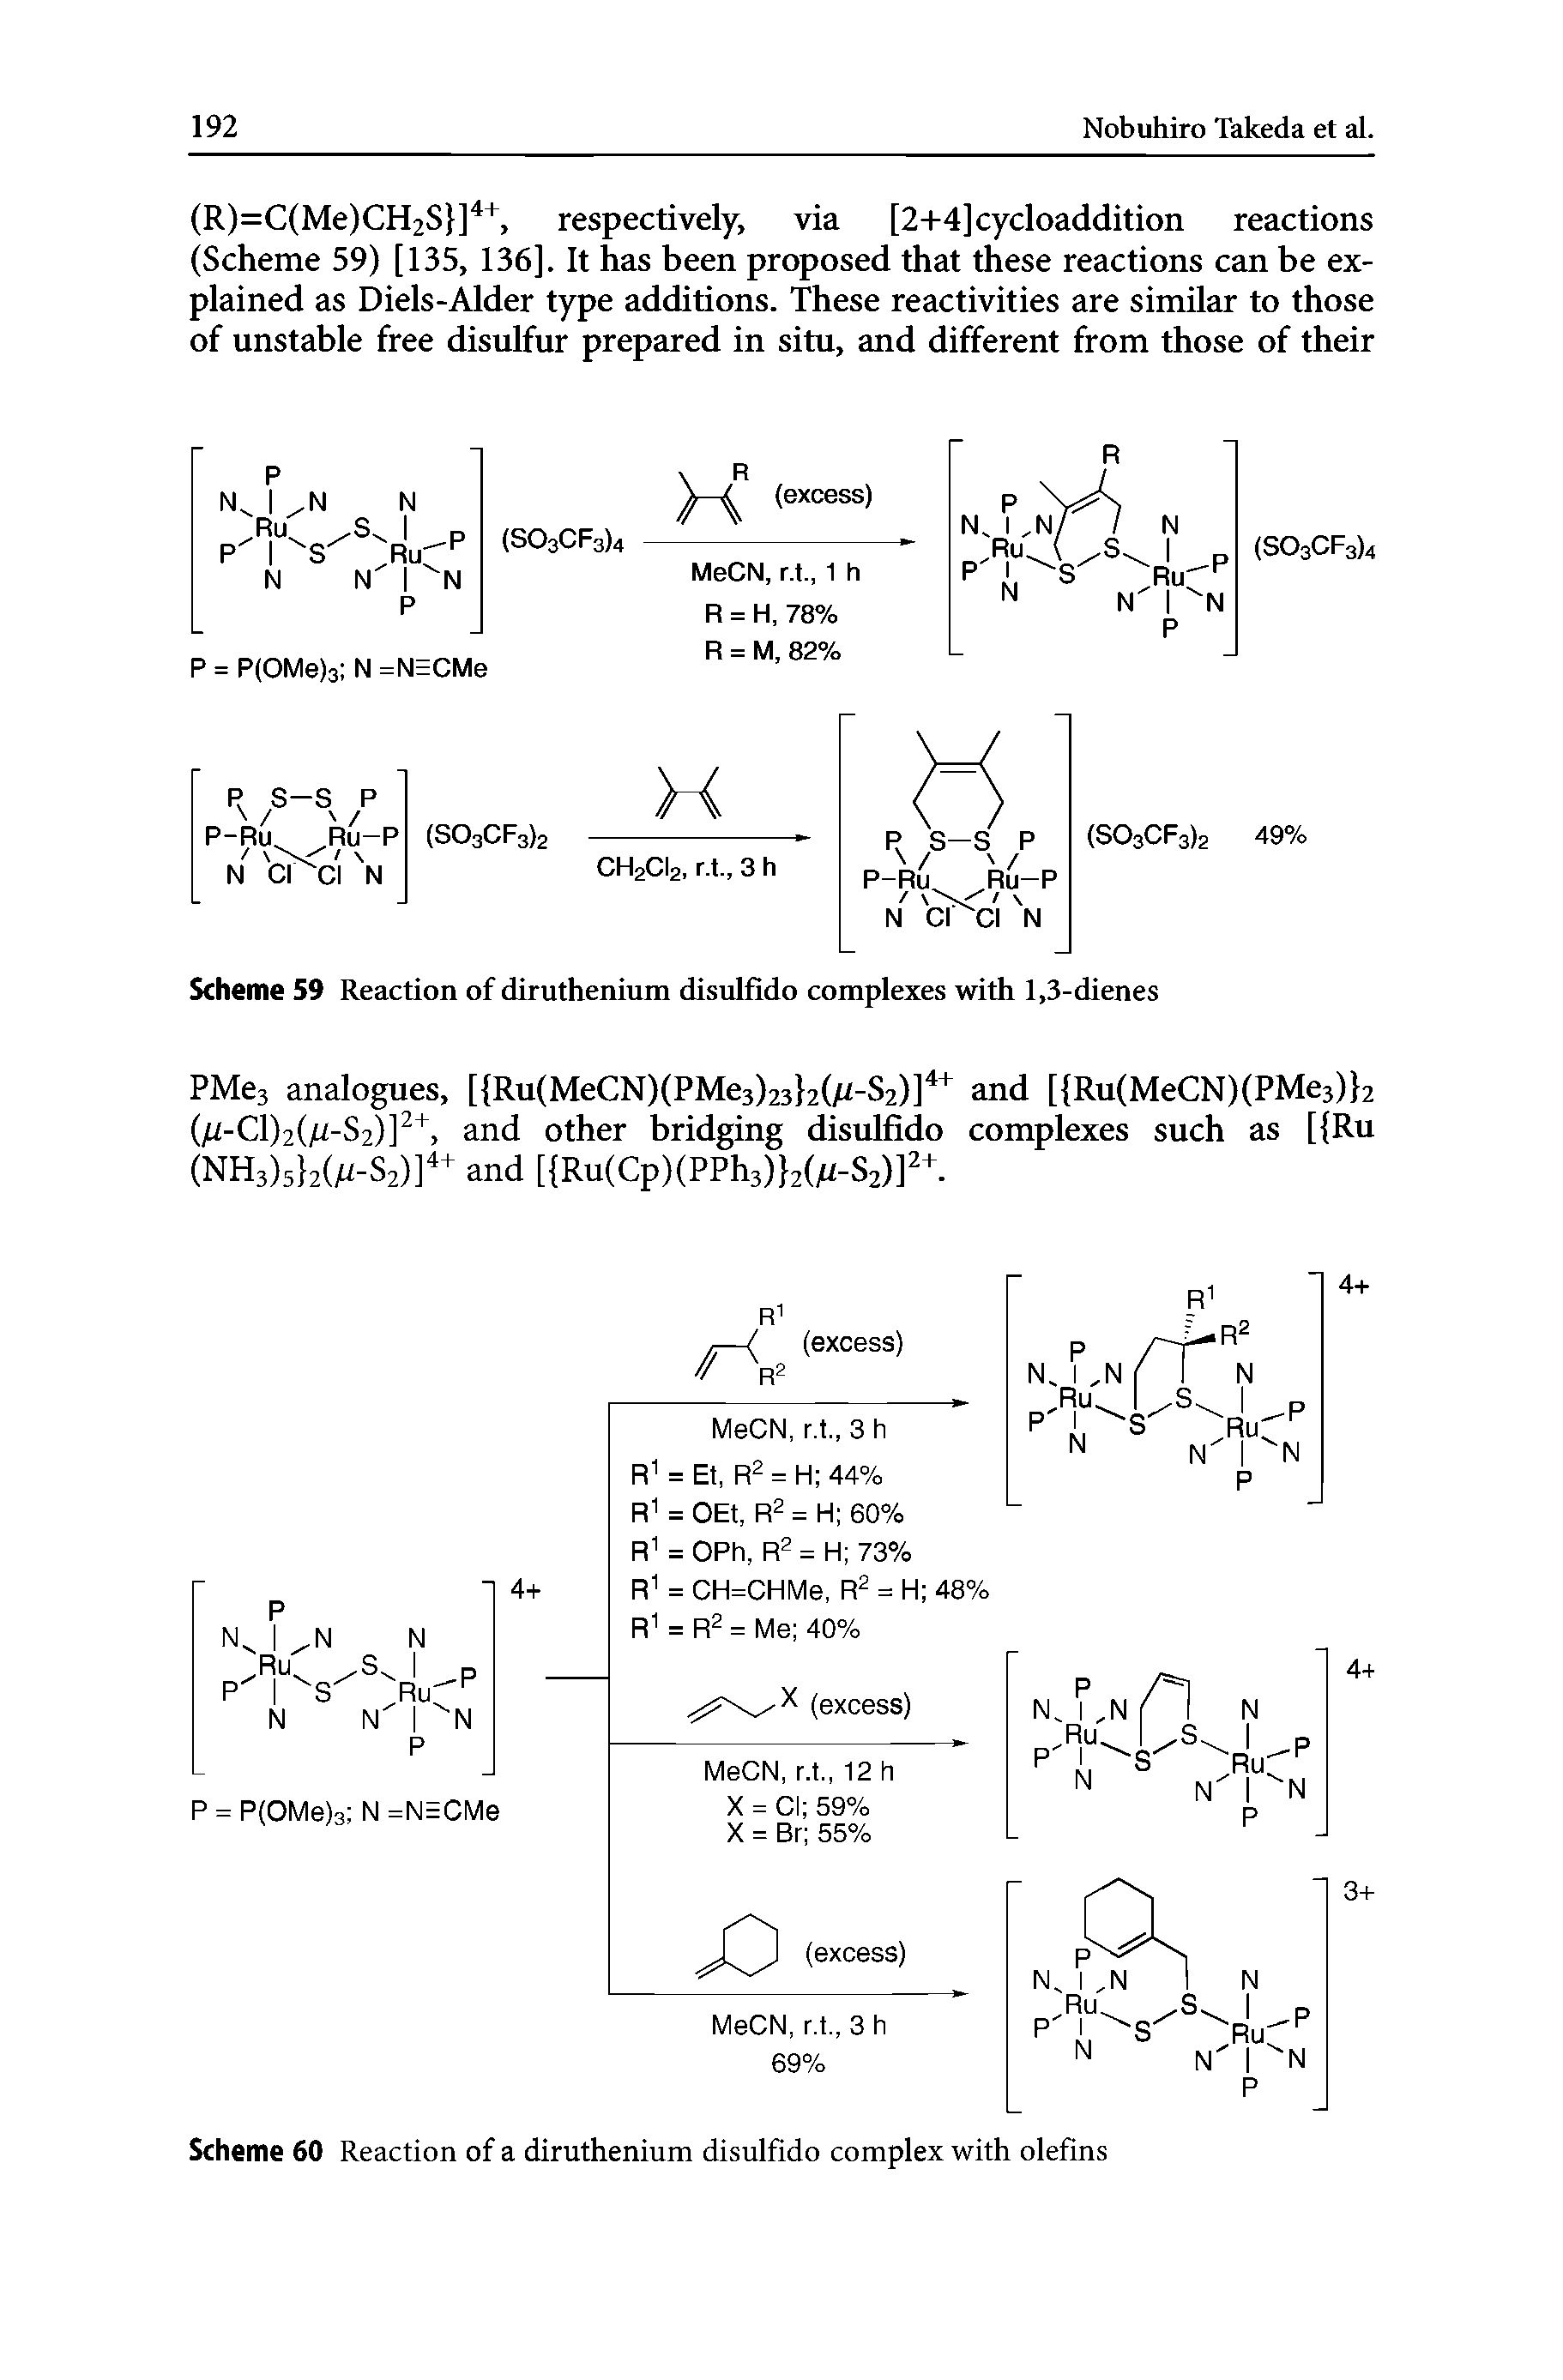 Scheme 60 Reaction of a diruthenium disulfido complex with olefins...